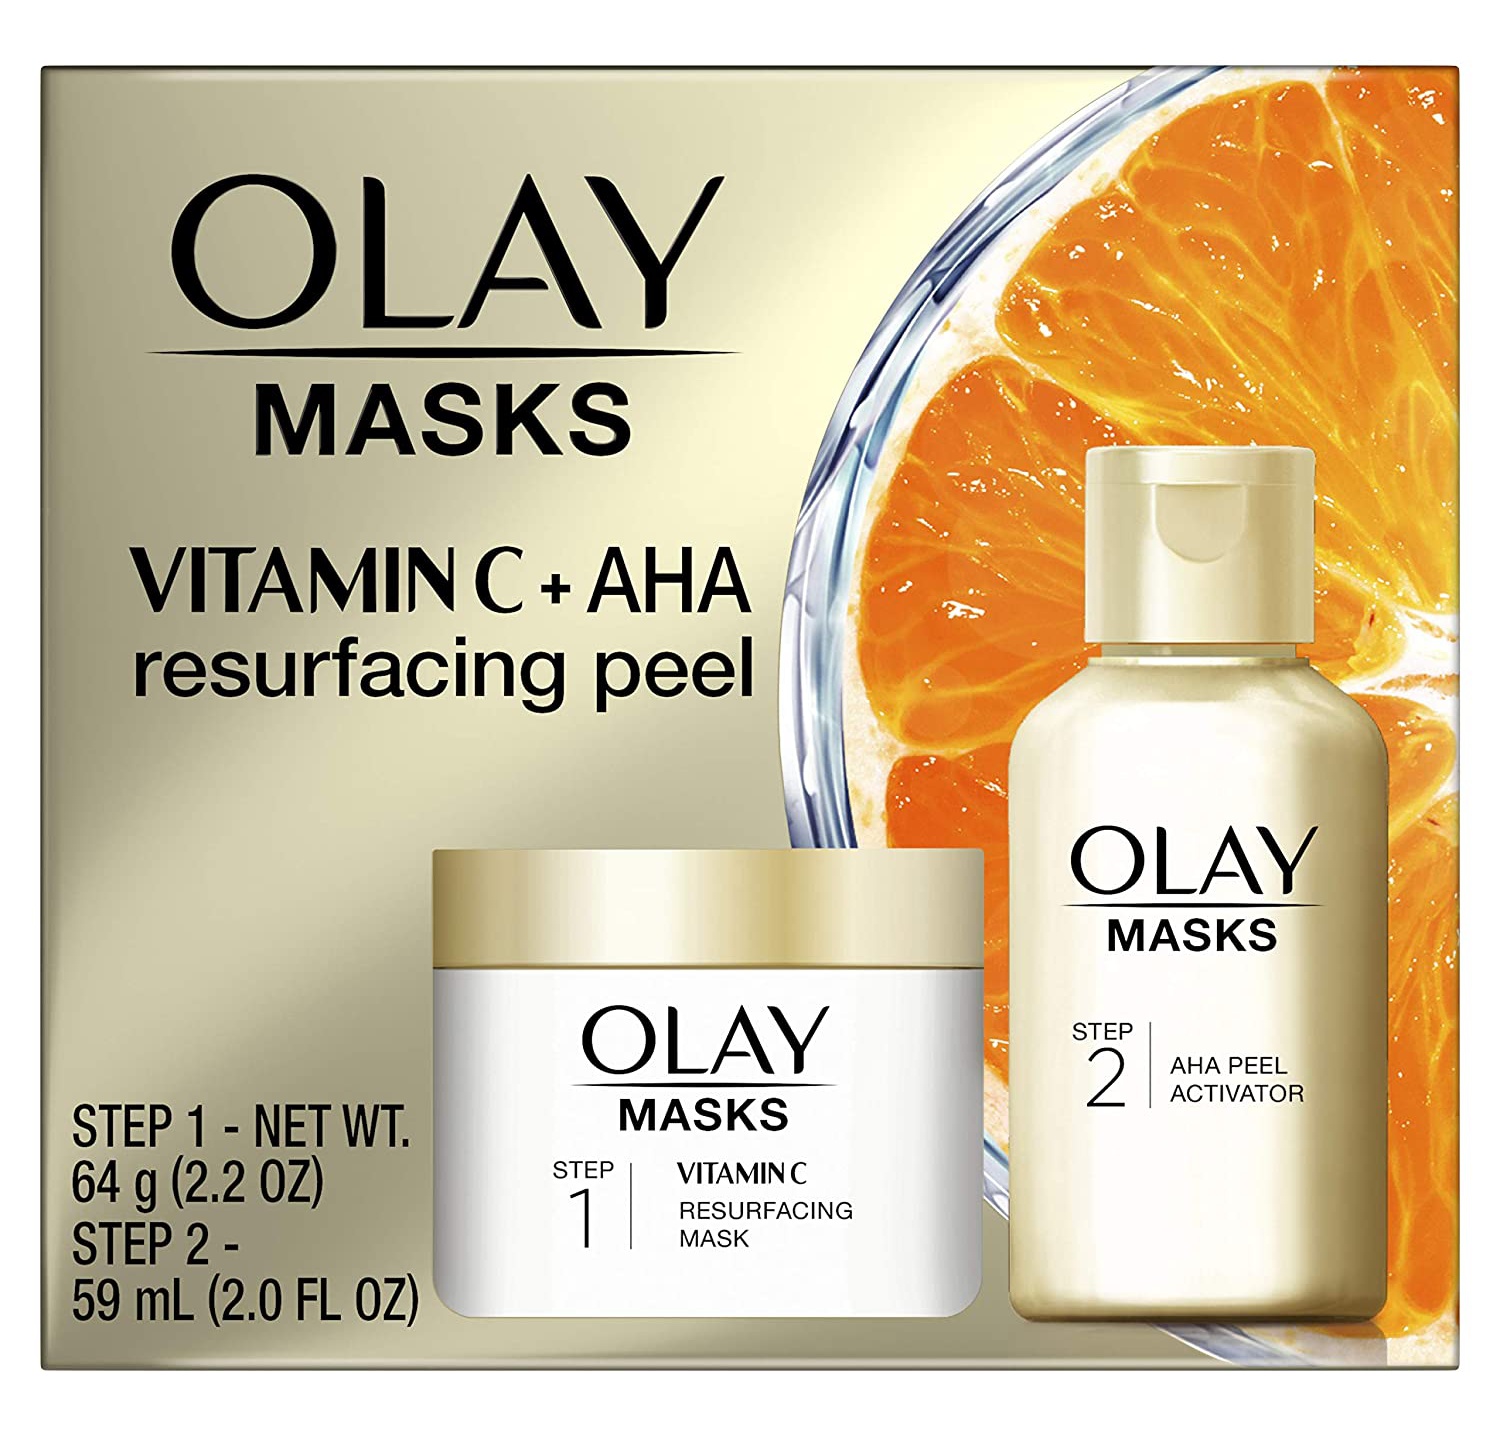 Olay Vitamin C Resurfacing Mask & Resurfacing Peel (Step 2)